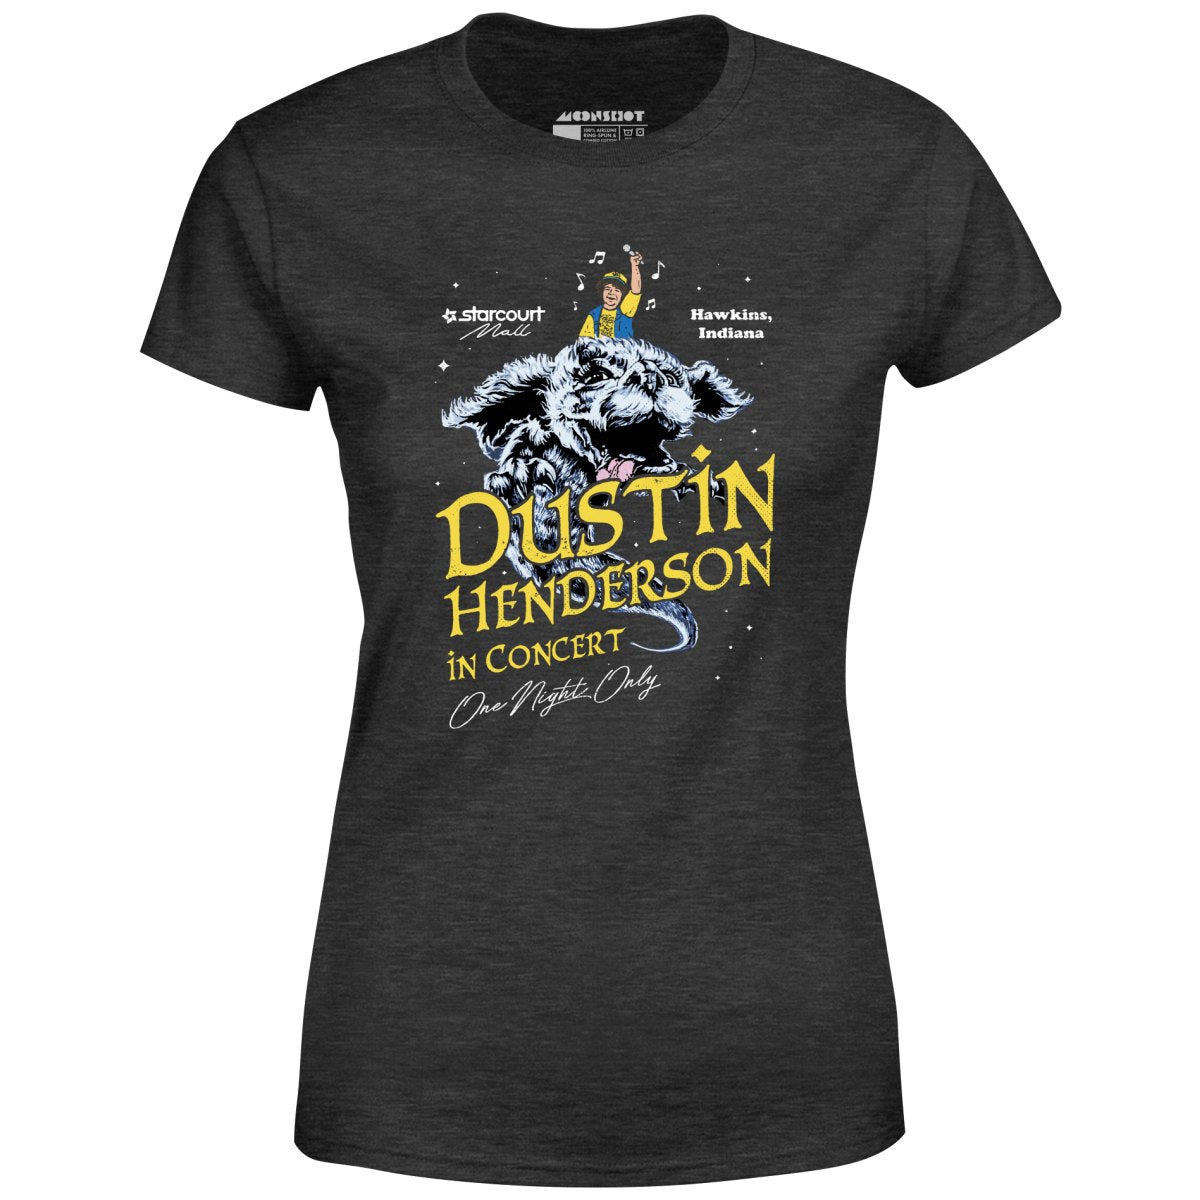 Dustin Henderson in Concert - Women's T-Shirt